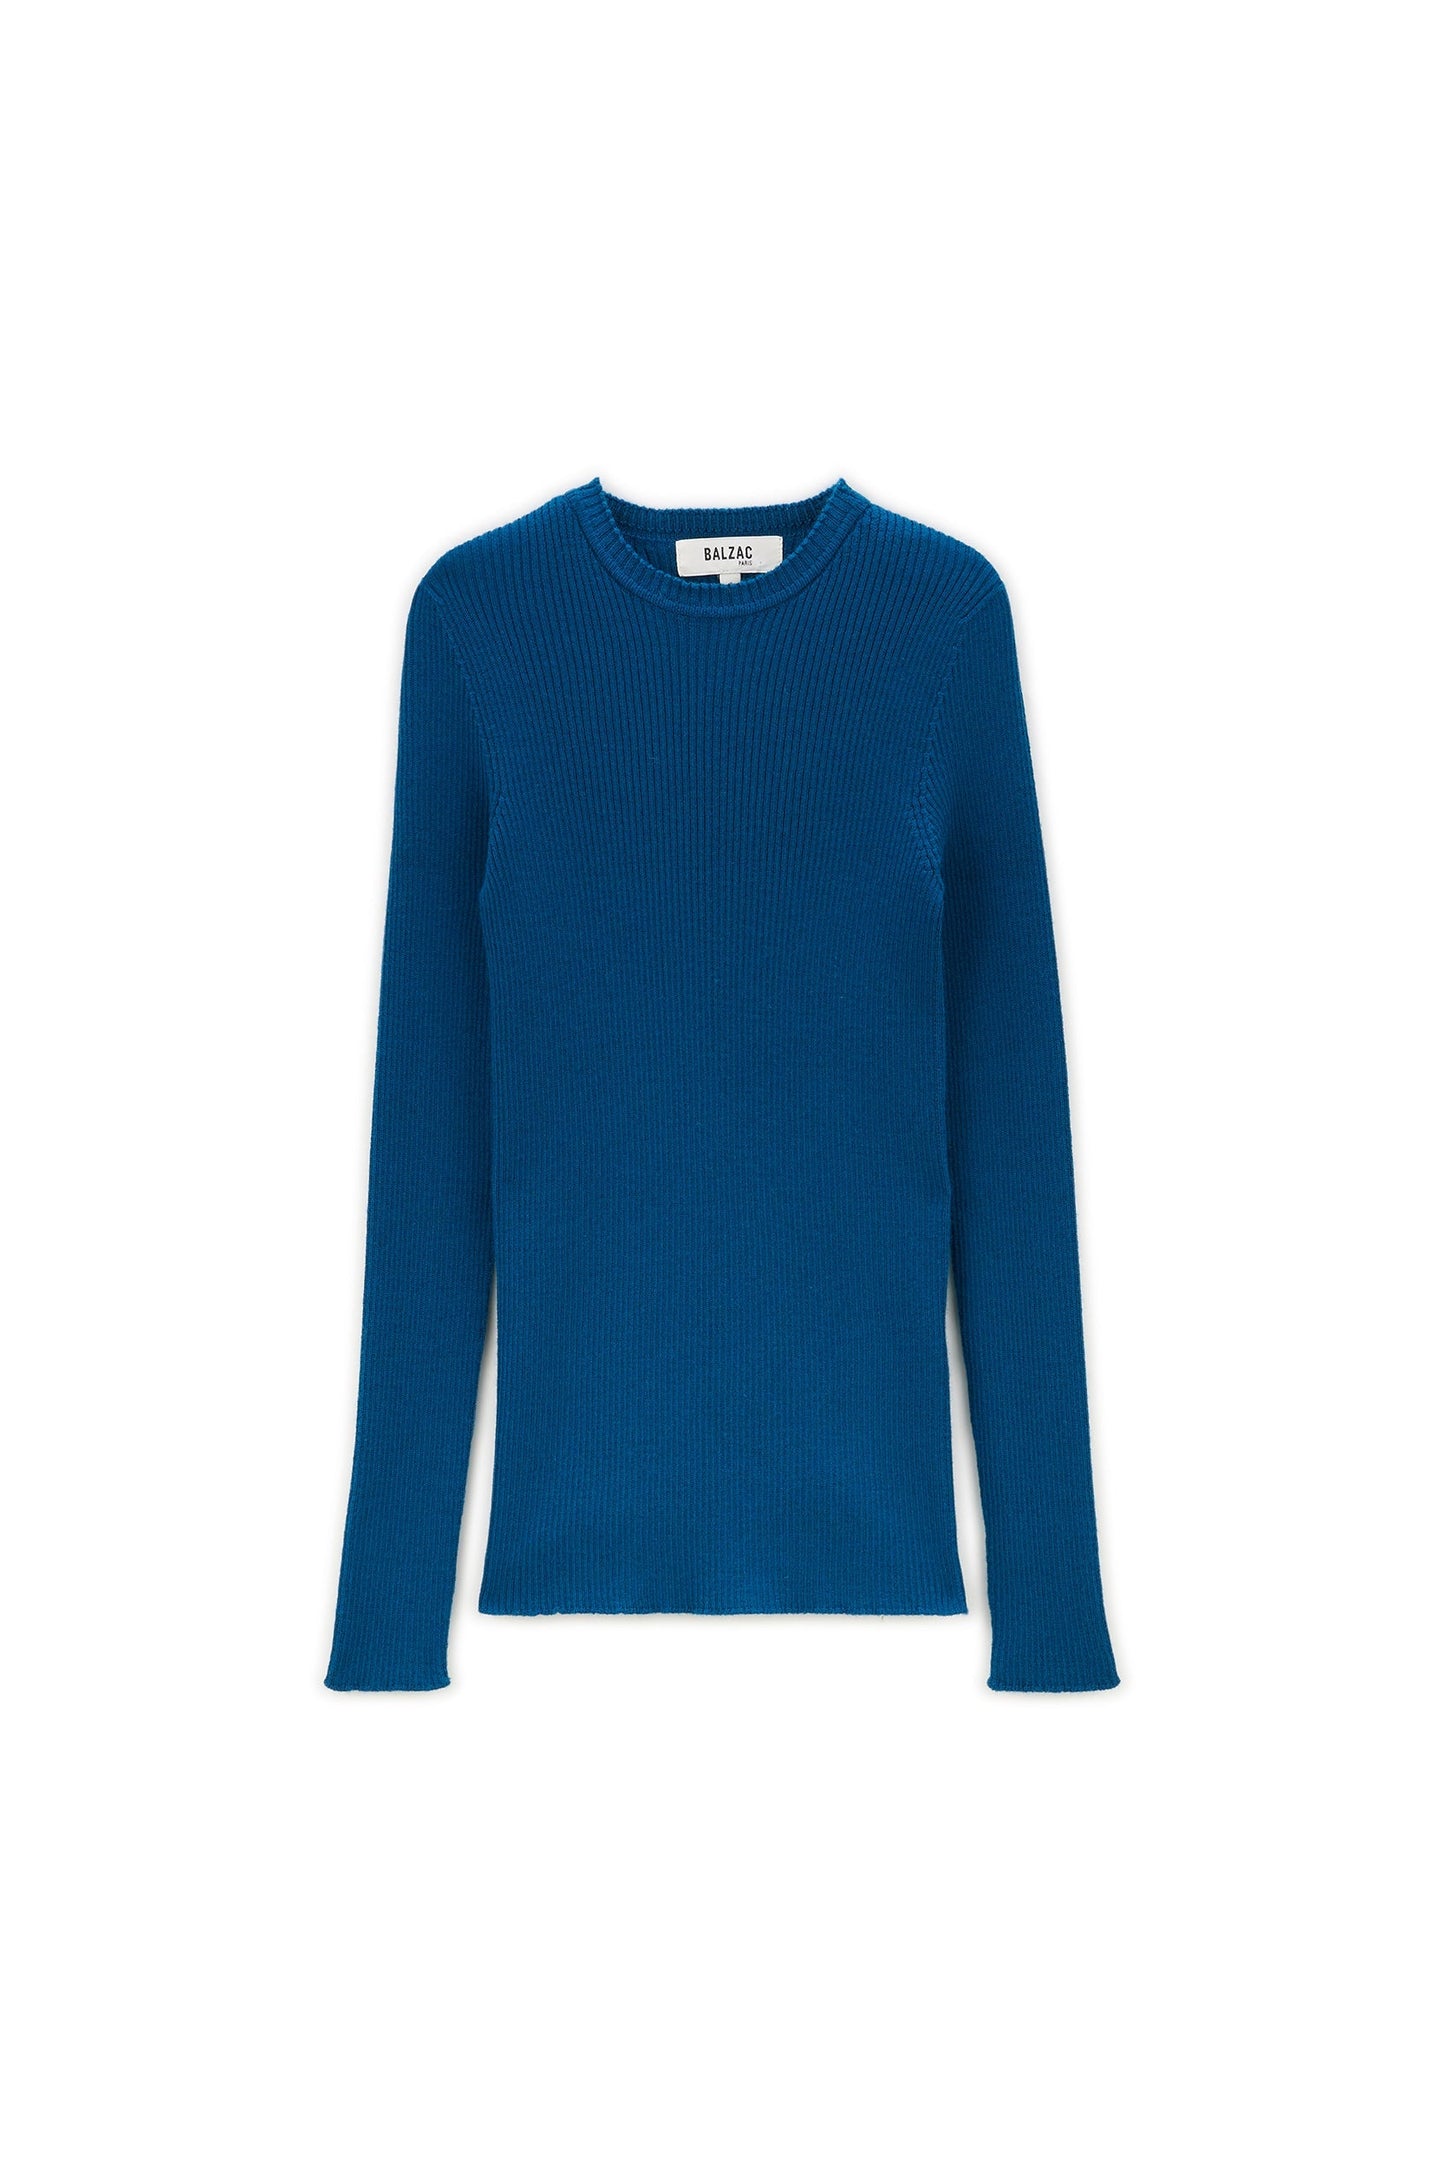 Duck blue Clafoutis sweater